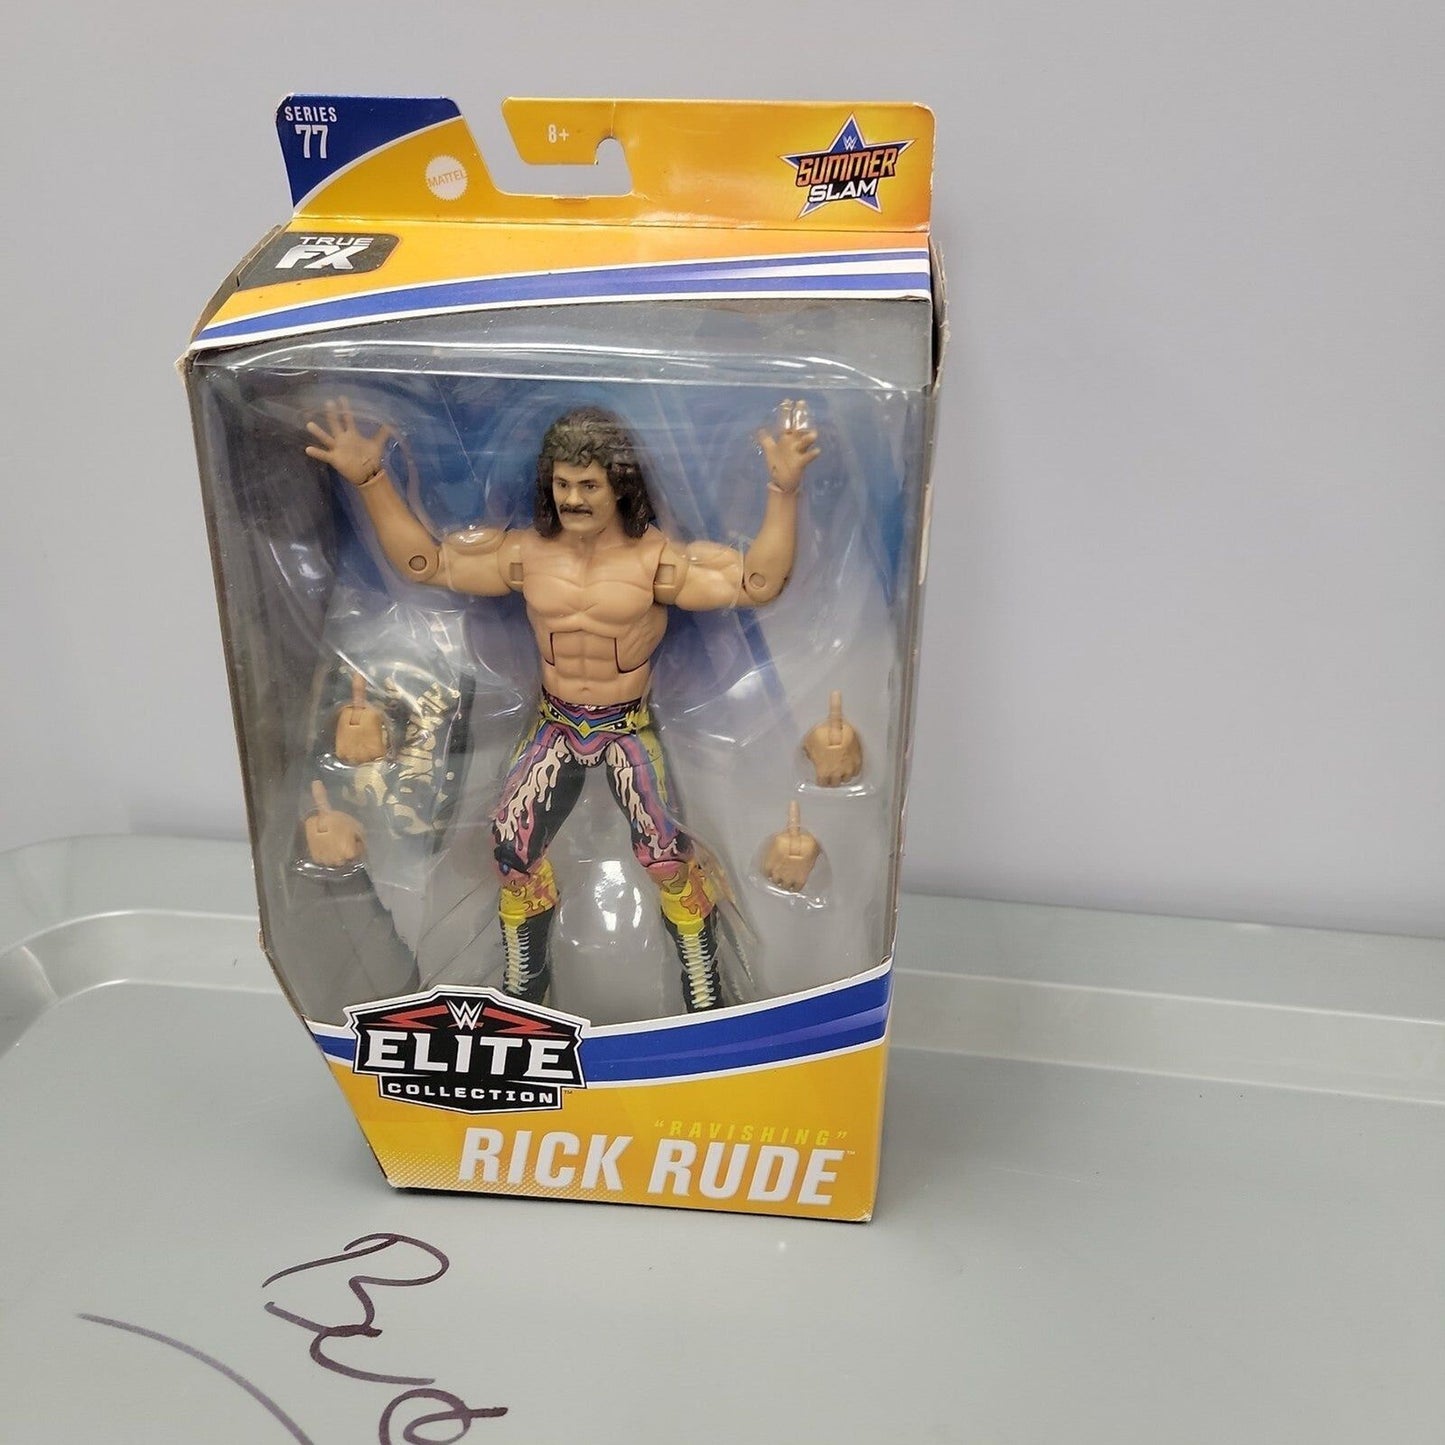 WWE Elite Collection Summer Slam "Ravashing" Rick Rude